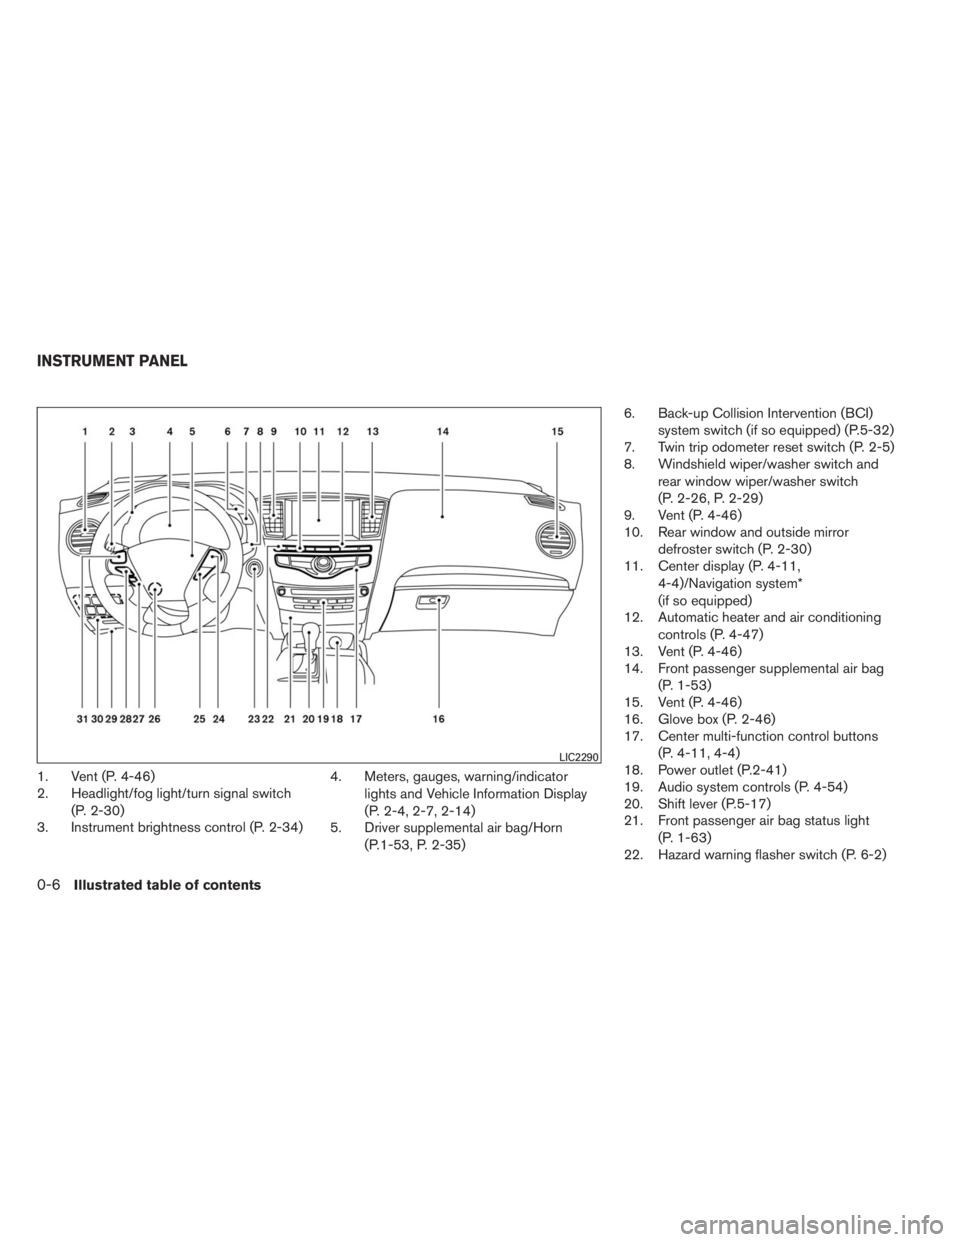 INFINITI QX60 2014 User Guide 1. Vent (P. 4-46)
2. Headlight/fog light/turn signal switch
(P. 2-30)
3. Instrument brightness control (P. 2-34)4. Meters, gauges, warning/indicator
lights and Vehicle Information Display
(P. 2-4, 2-7